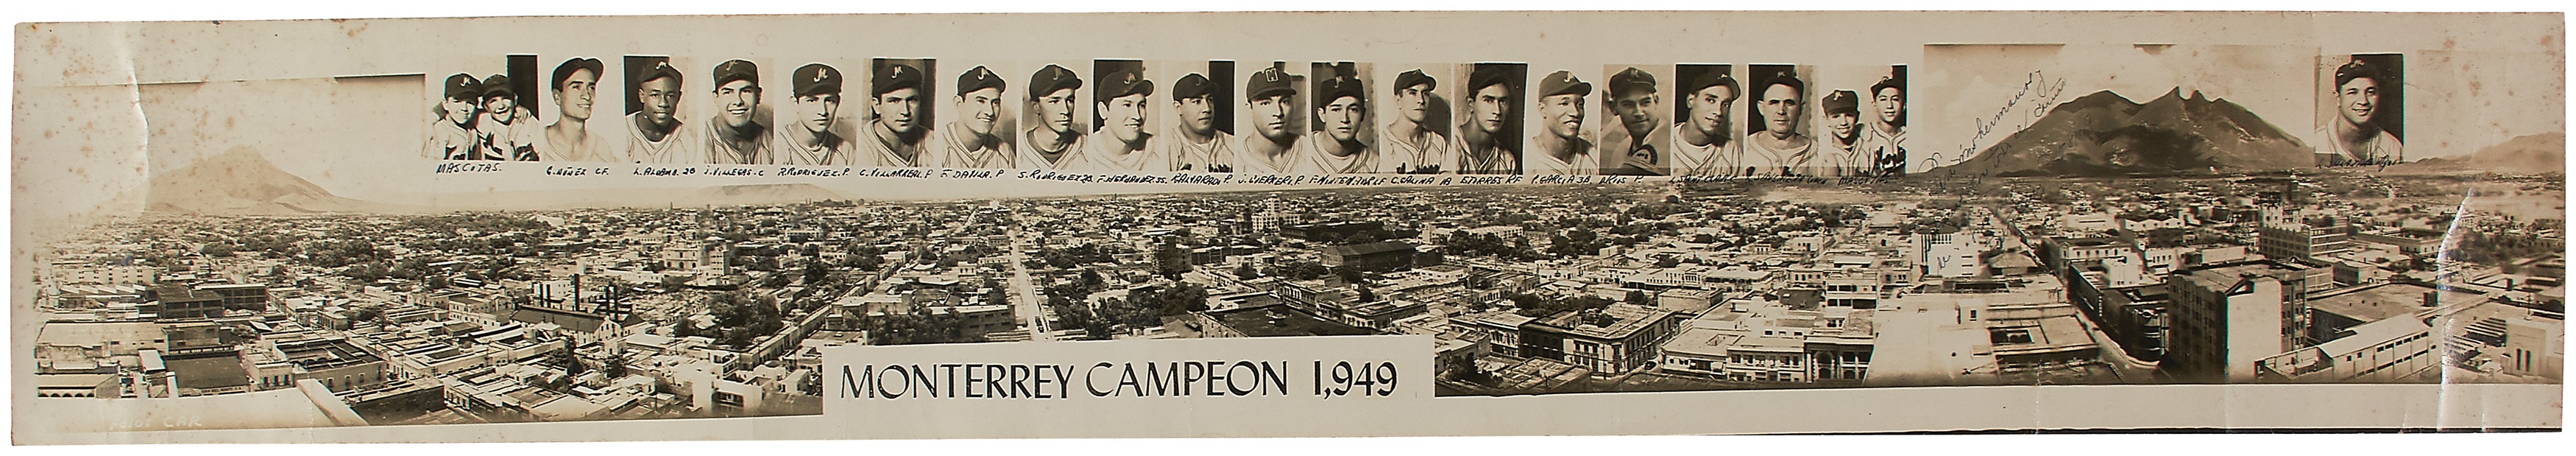 1949 Monterrey Sultanas Panorama Signed by Lazaro Salazar (ex-Salazar Family)